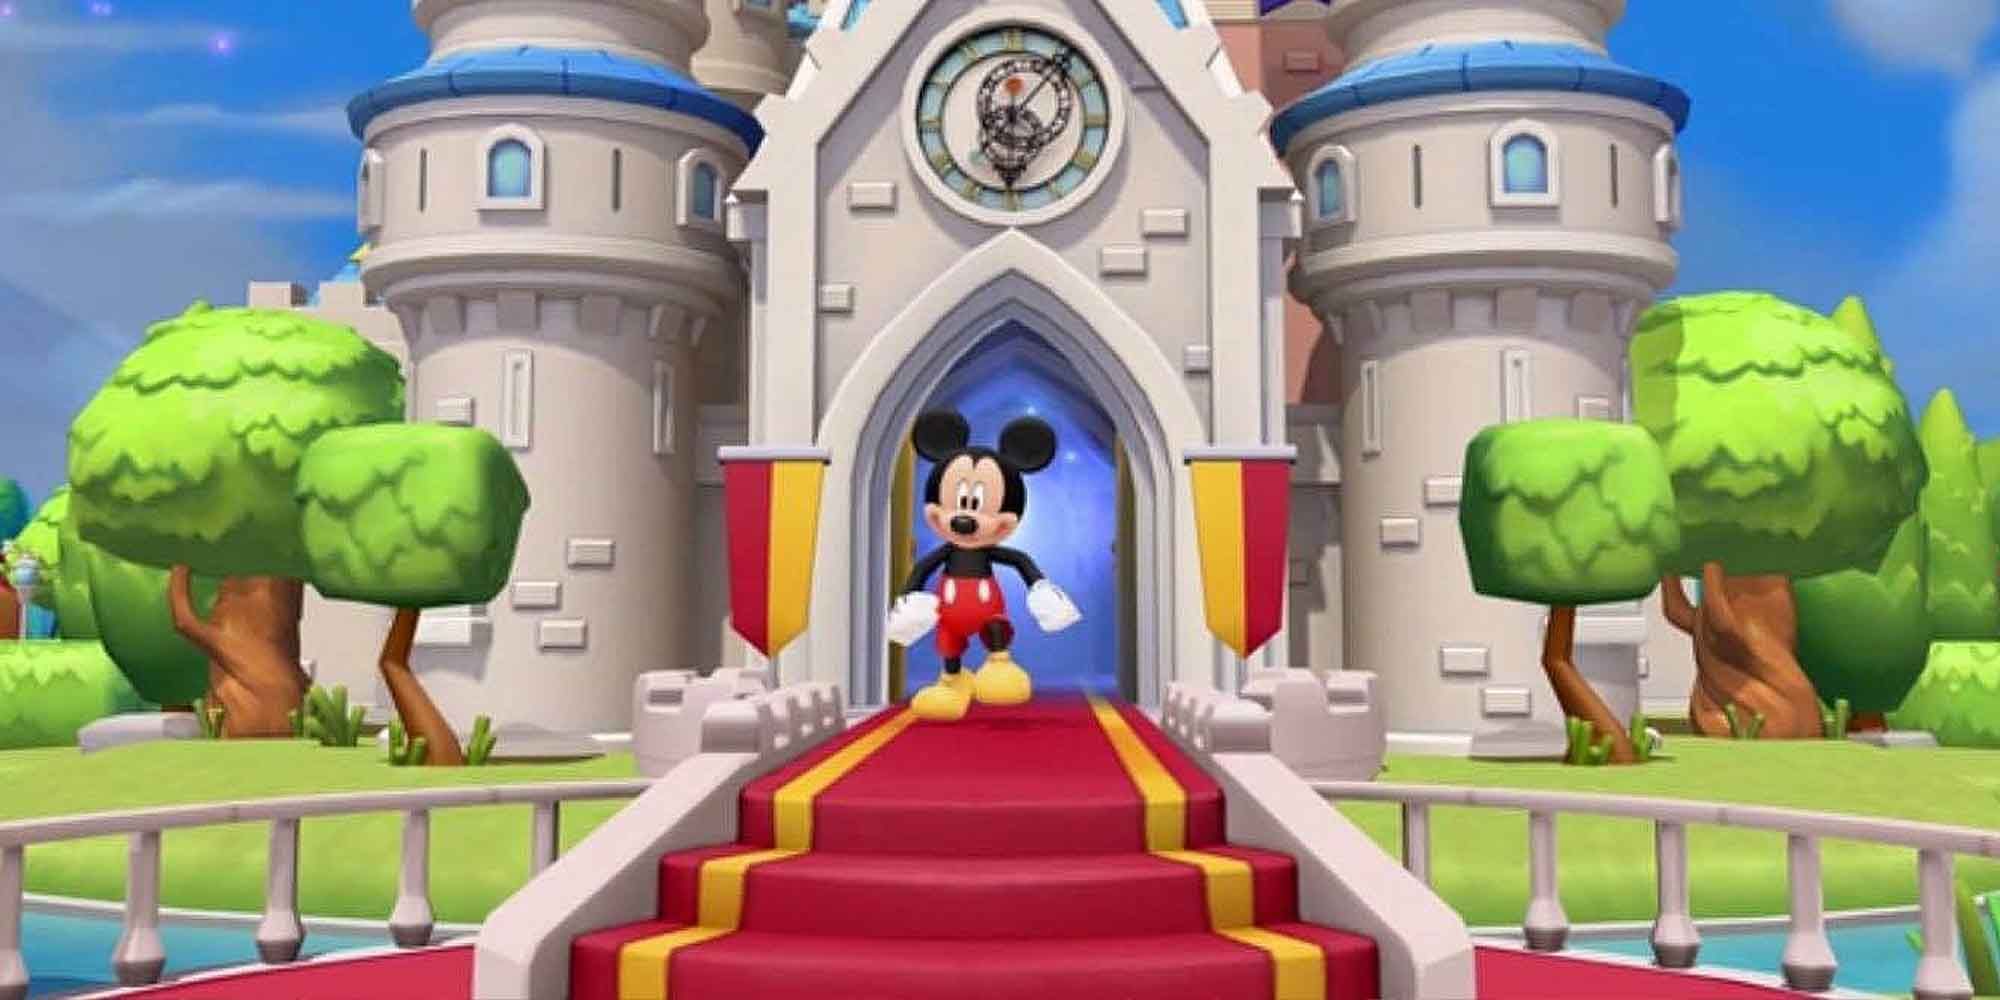 Micky Mouse leaving a castle